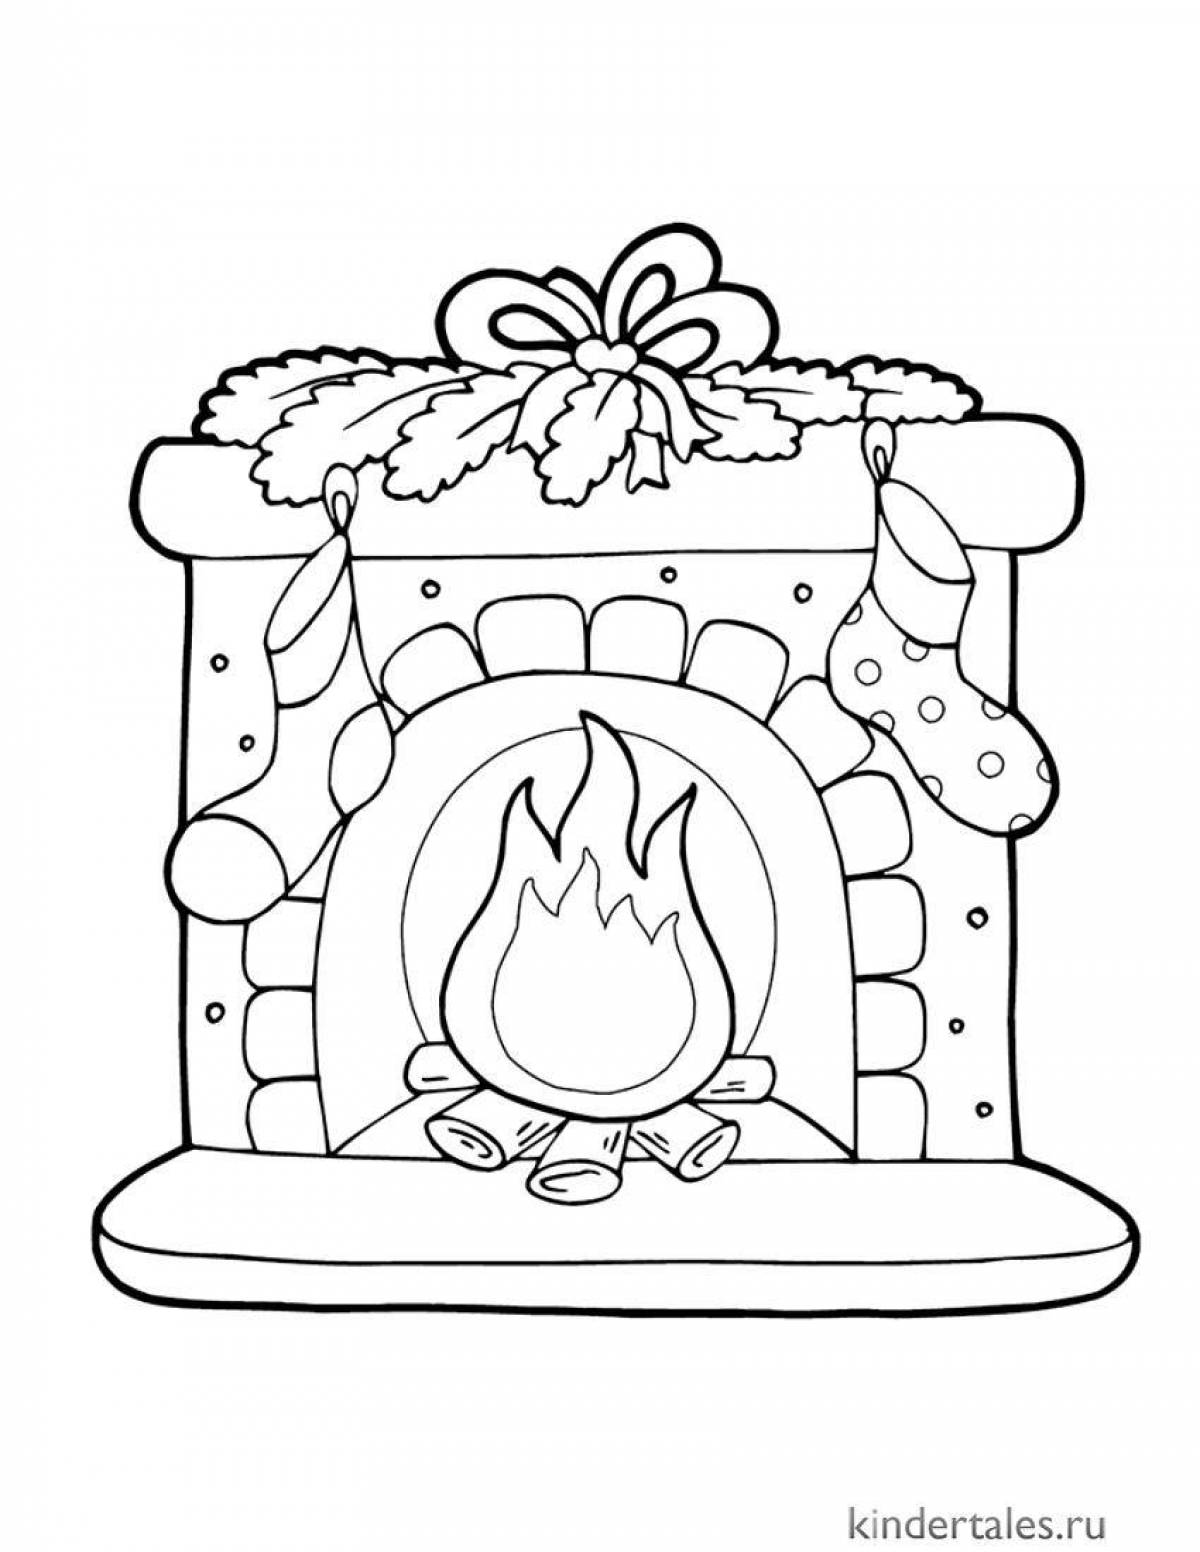 Magic fireplace coloring book